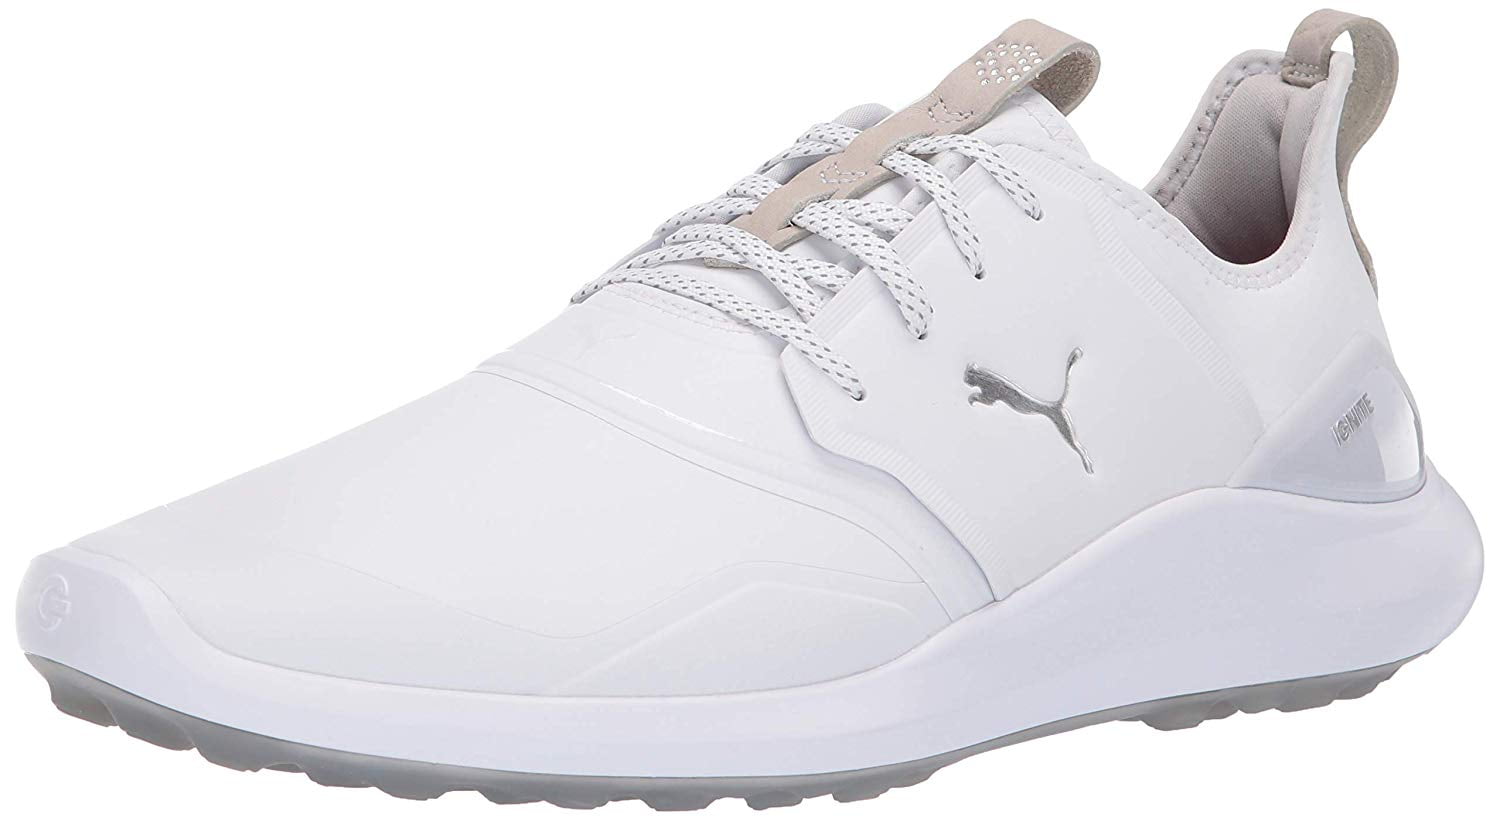 puma men's ignite nxt pro golf shoes